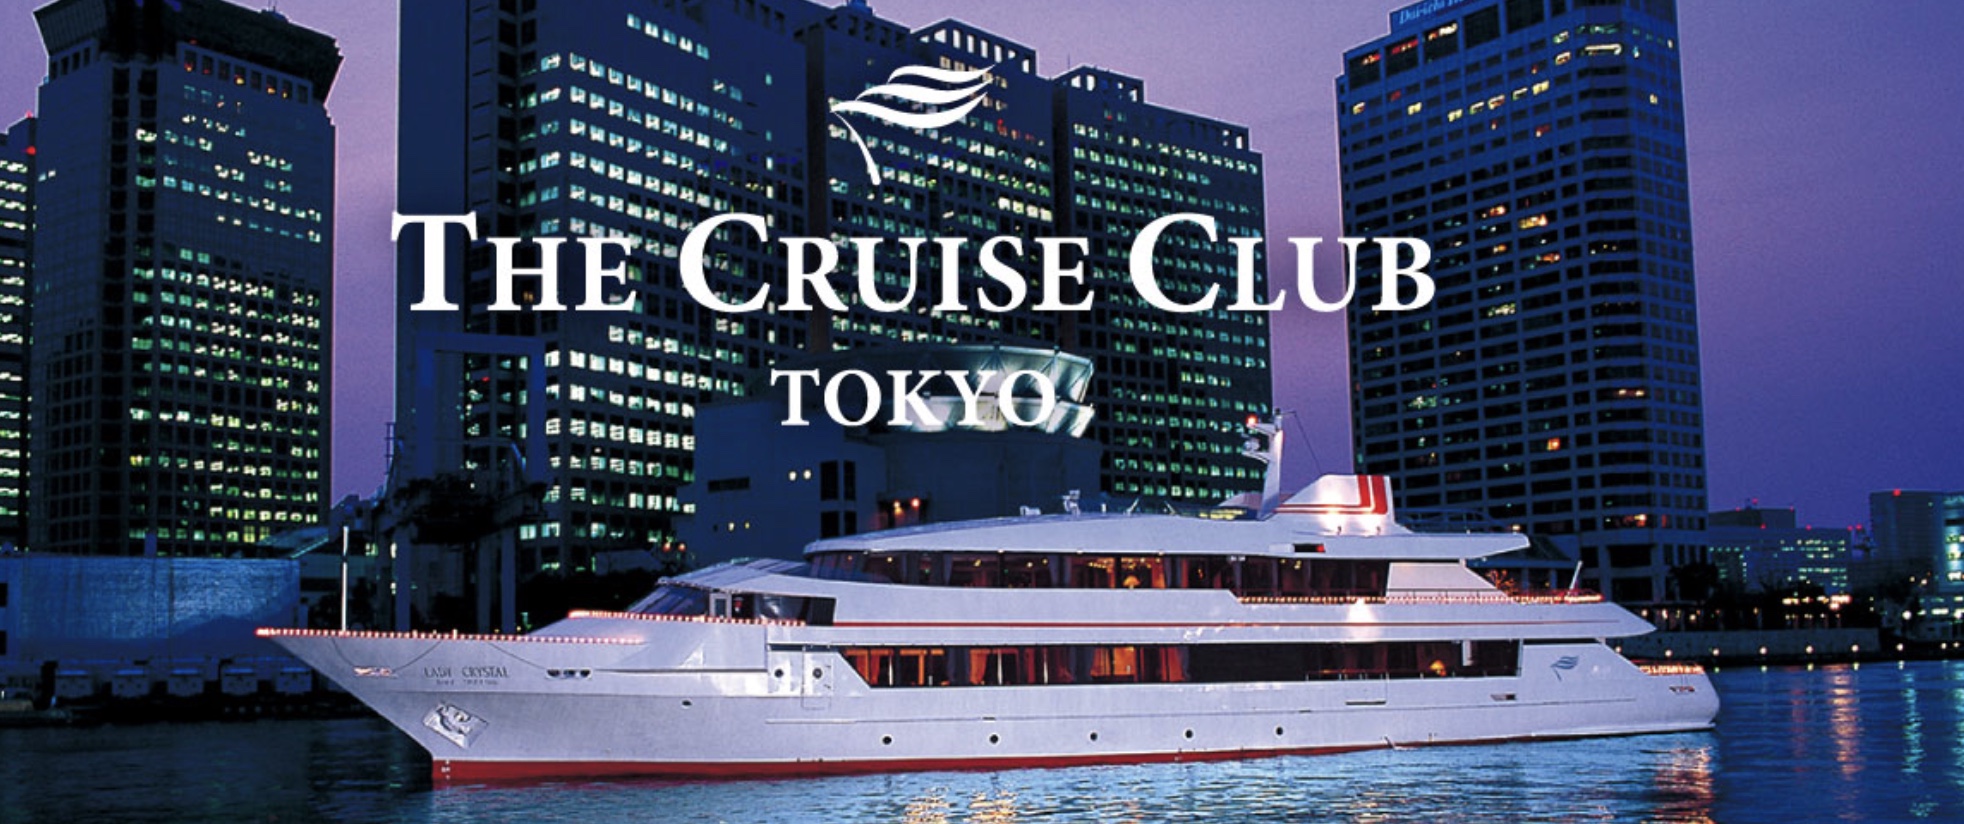 THE CRUISE CLUB TOKYO